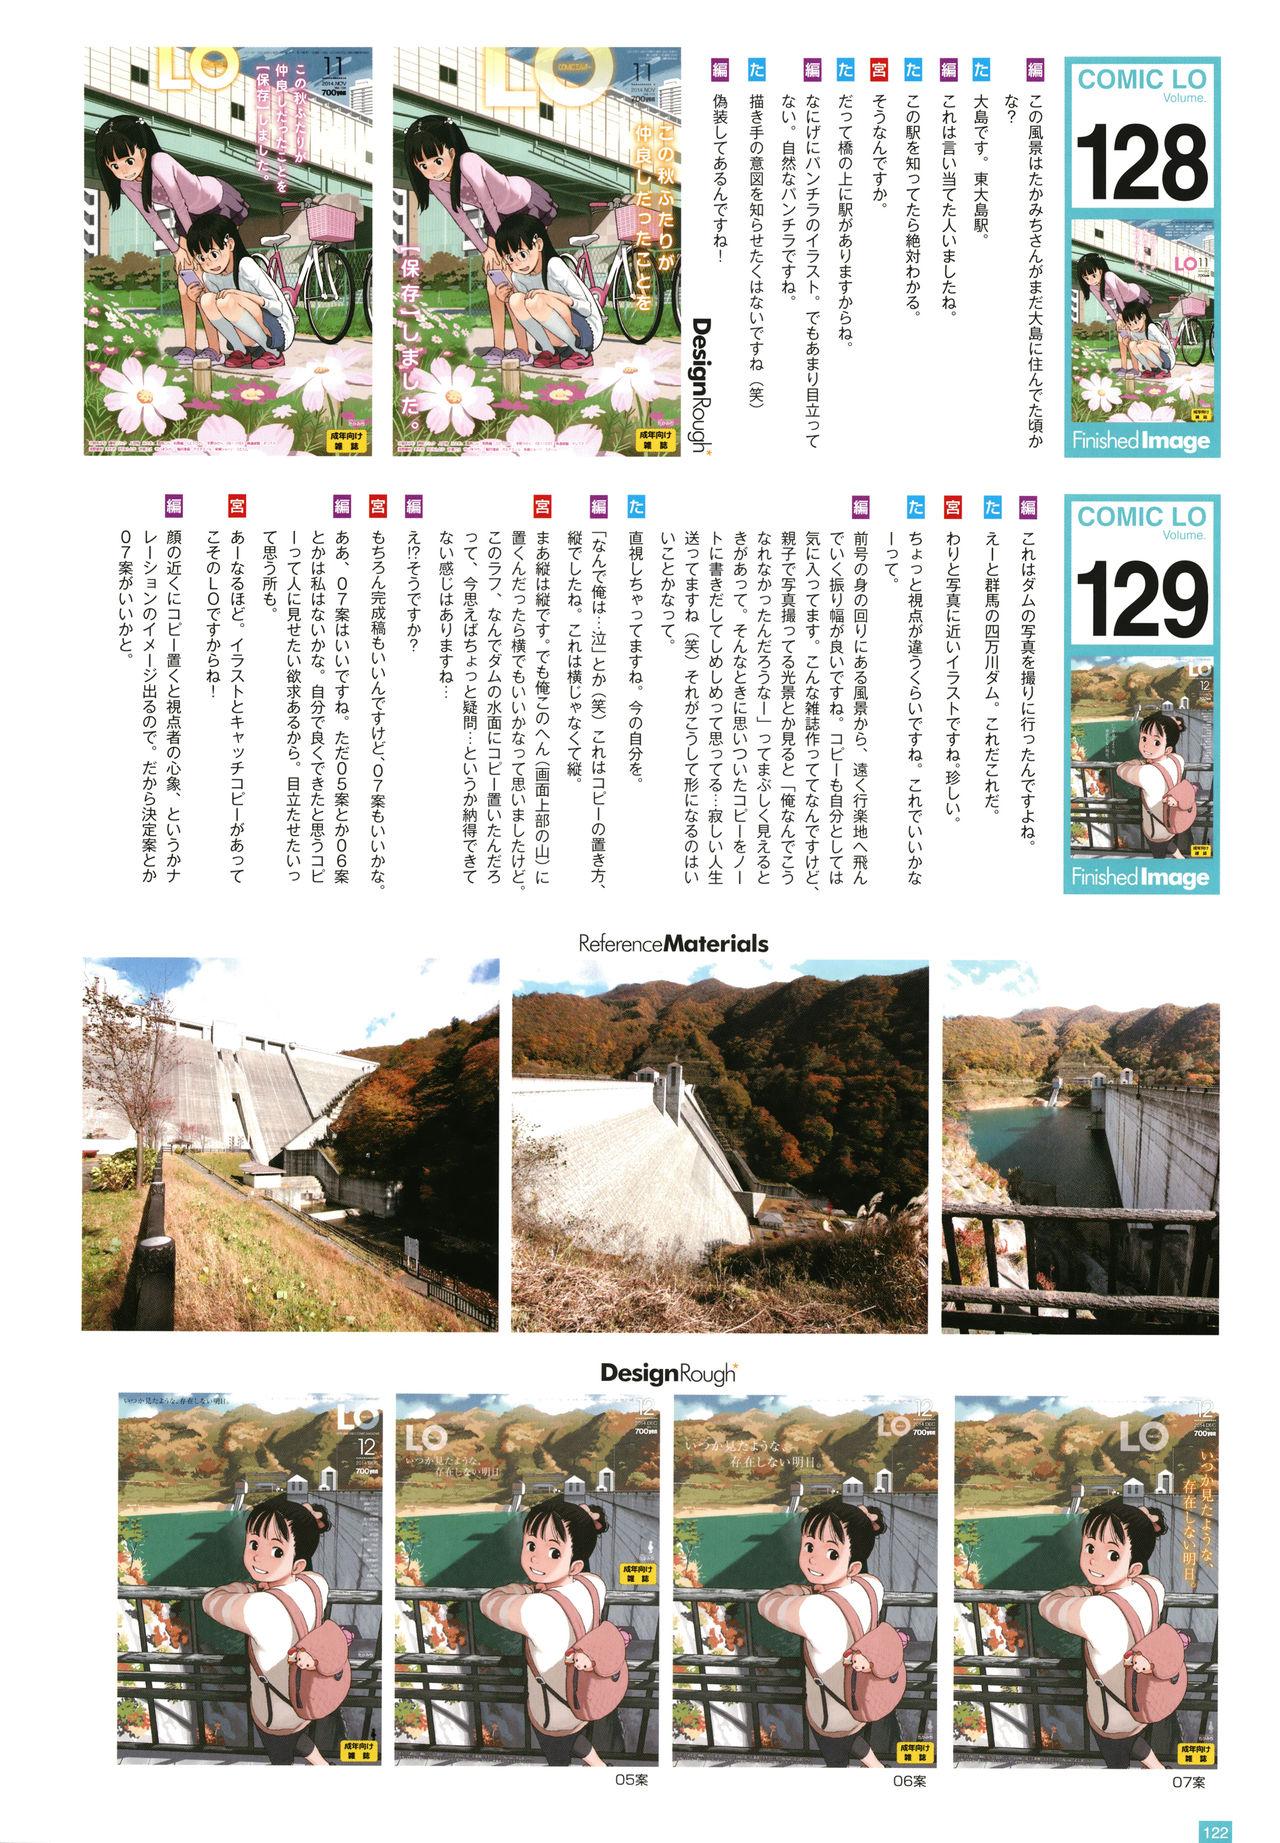 [Takamichi] LO Artbook 2-B TAKAMICHI LO-fi WORKS 124